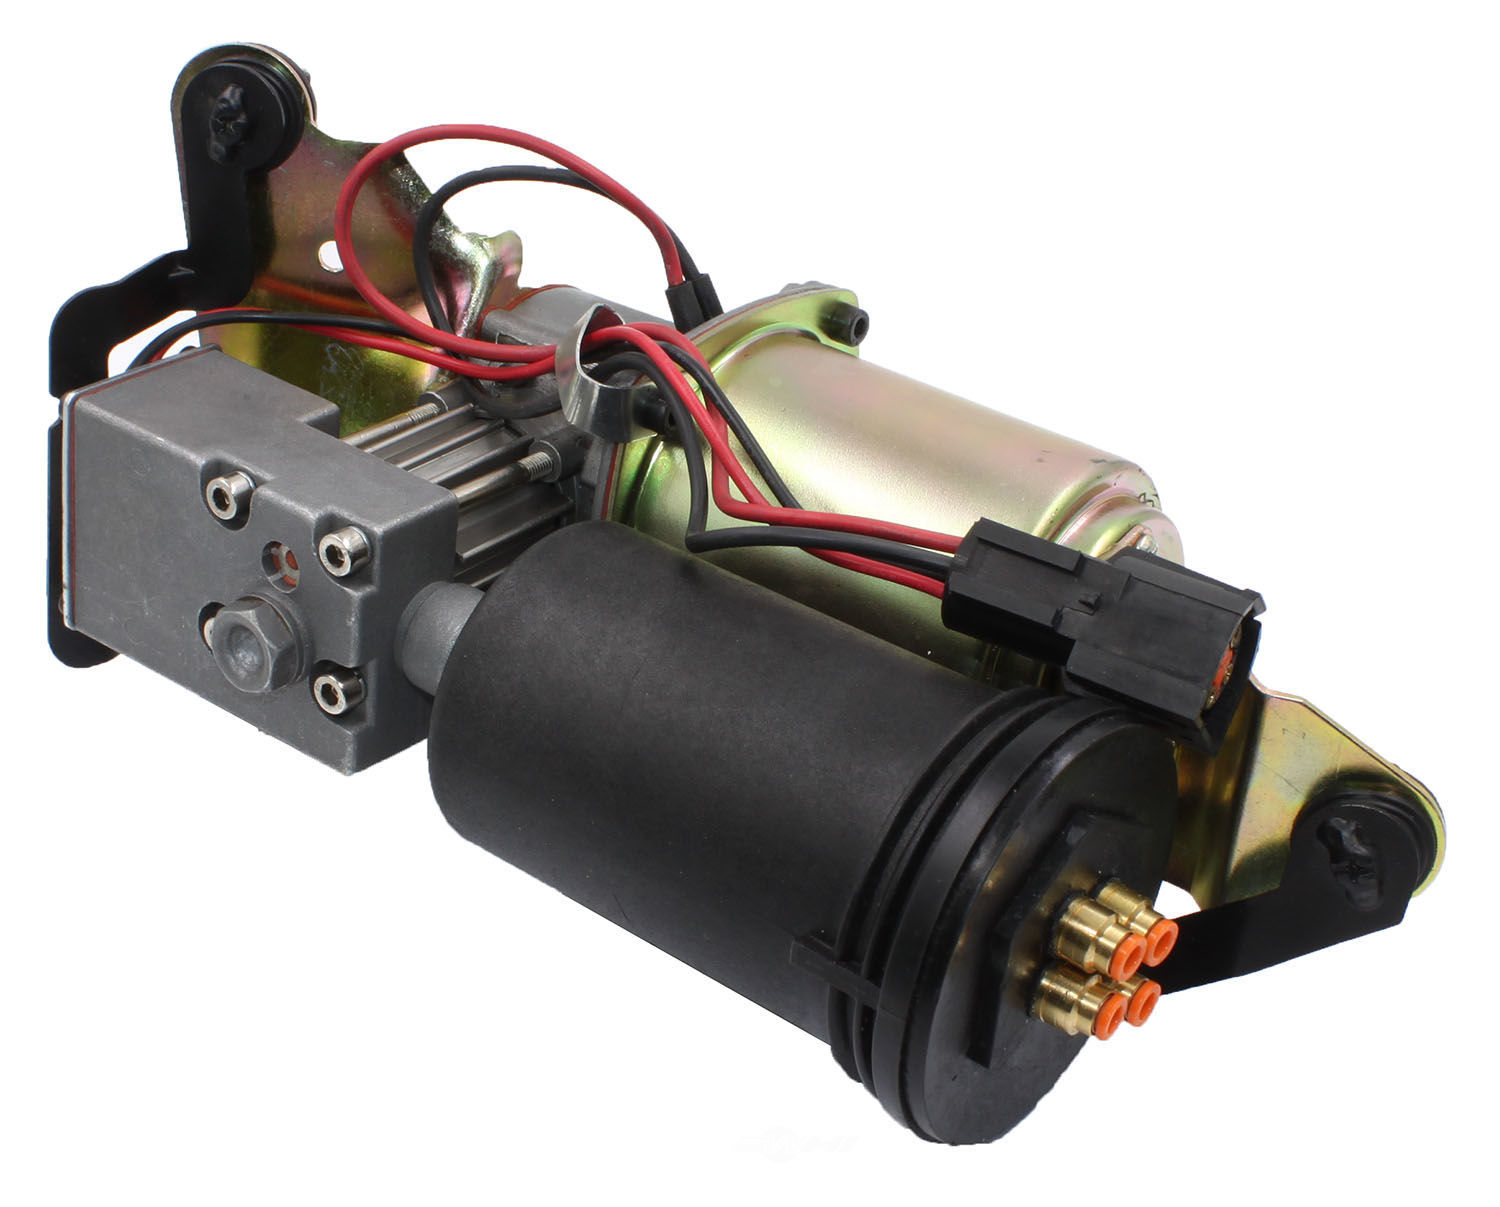 WESTAR - Suspension Air Compressor / Dryer Vibration Isolator Kit - WSR CD-7701